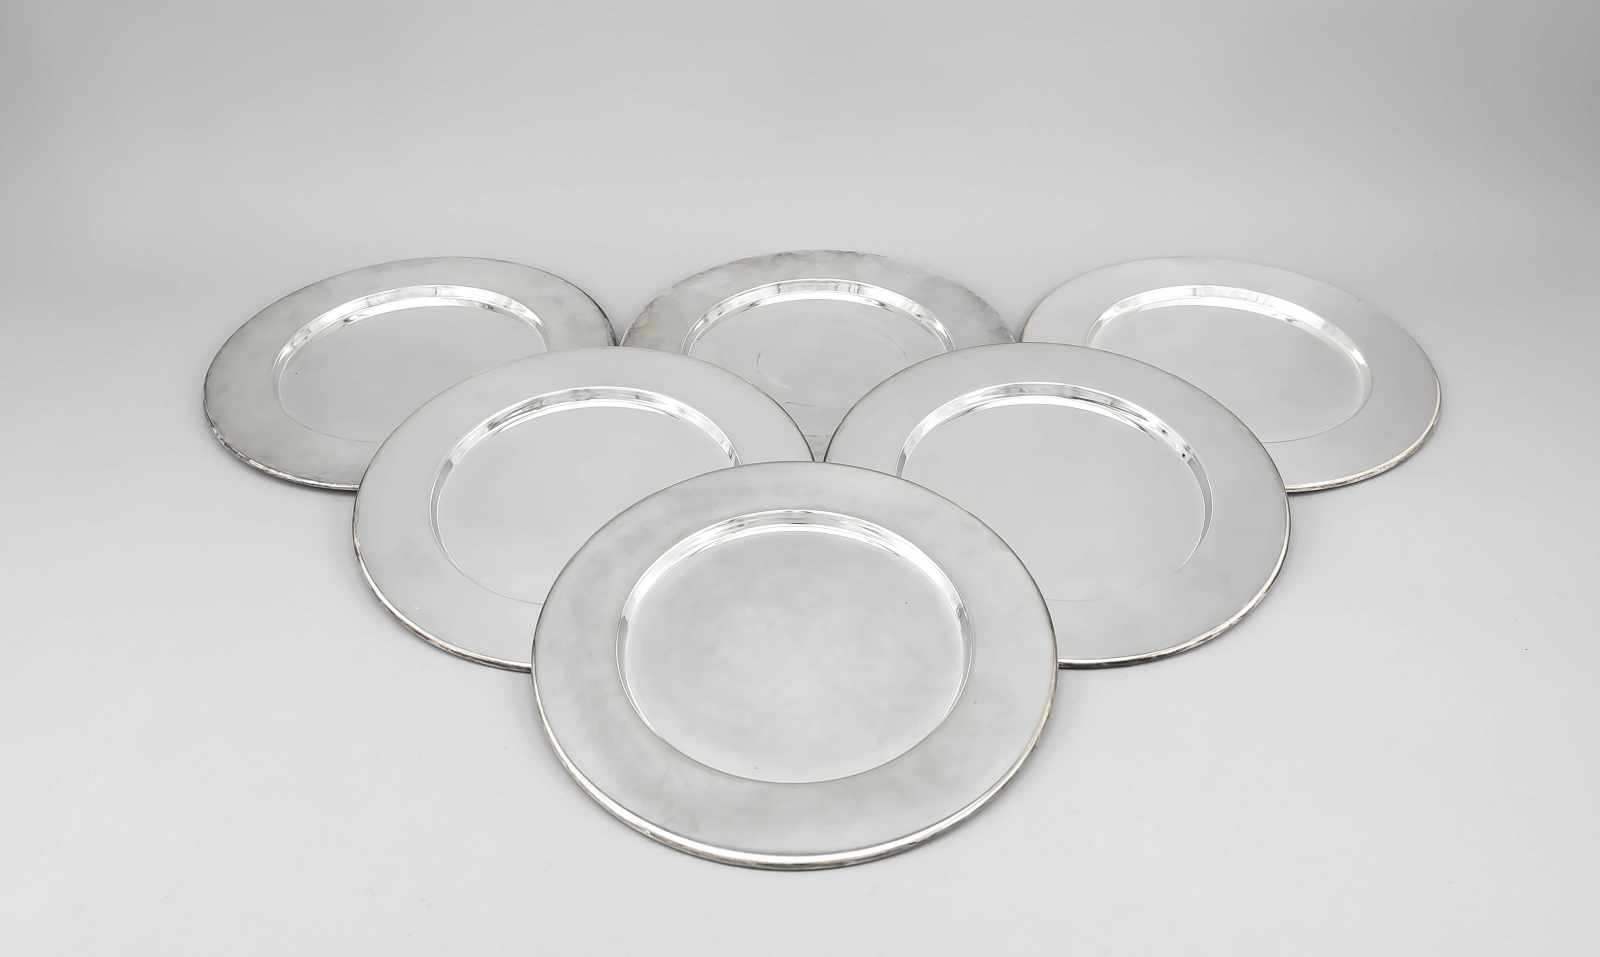 Acht Platzteller, 20. Jh., plated, glatte gemuldete Form, Ø 29,5 cmEight charger plates, 20th